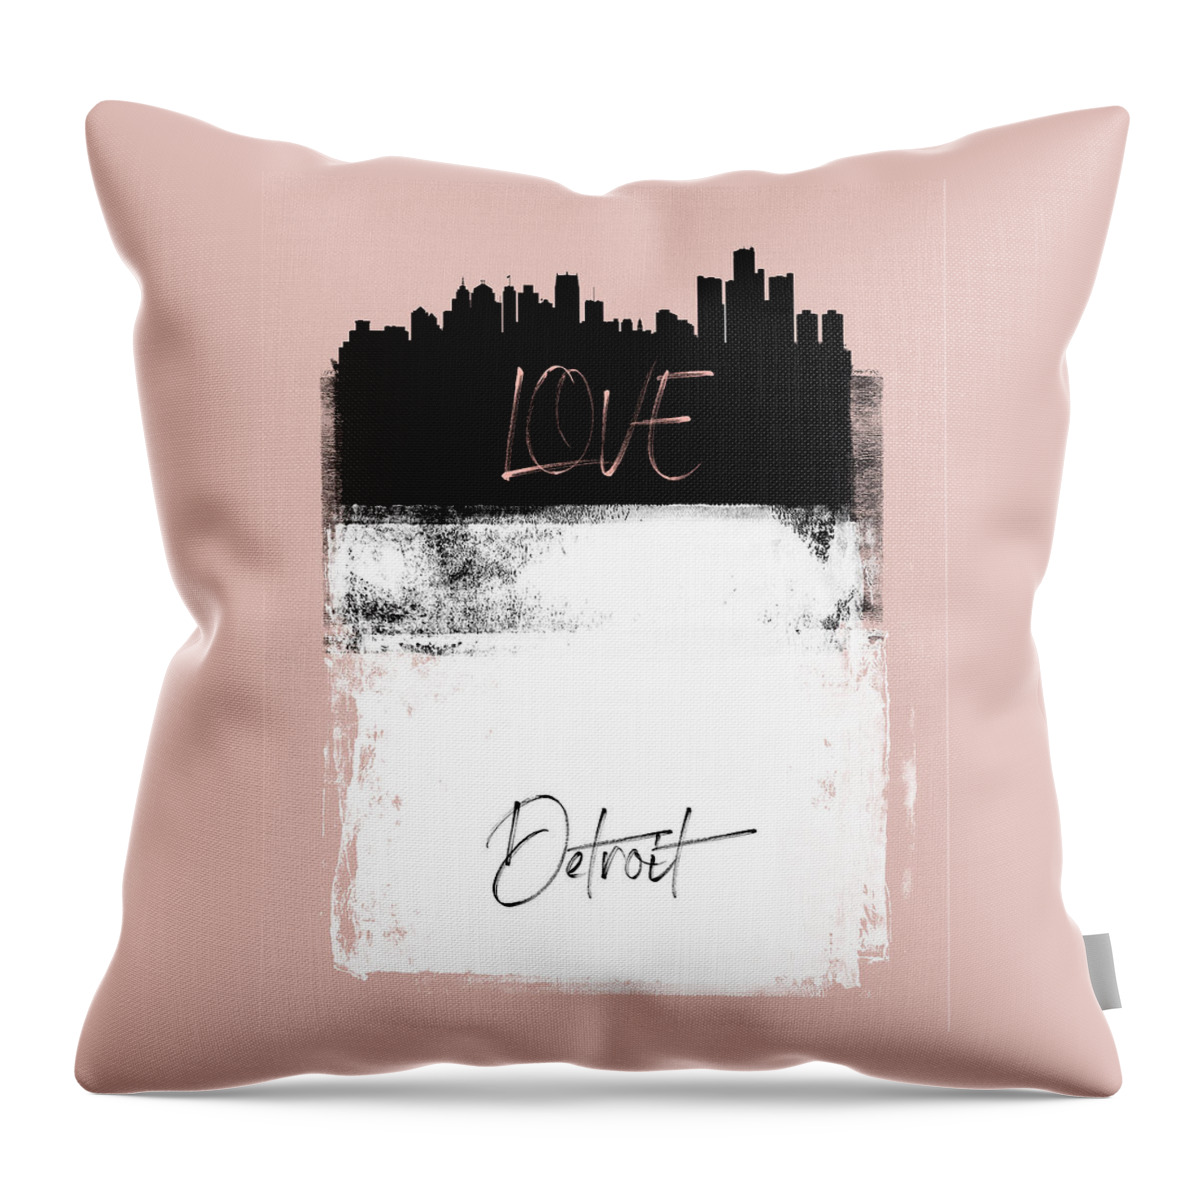 Detroit Throw Pillow featuring the photograph Love Detroit by Naxart Studio